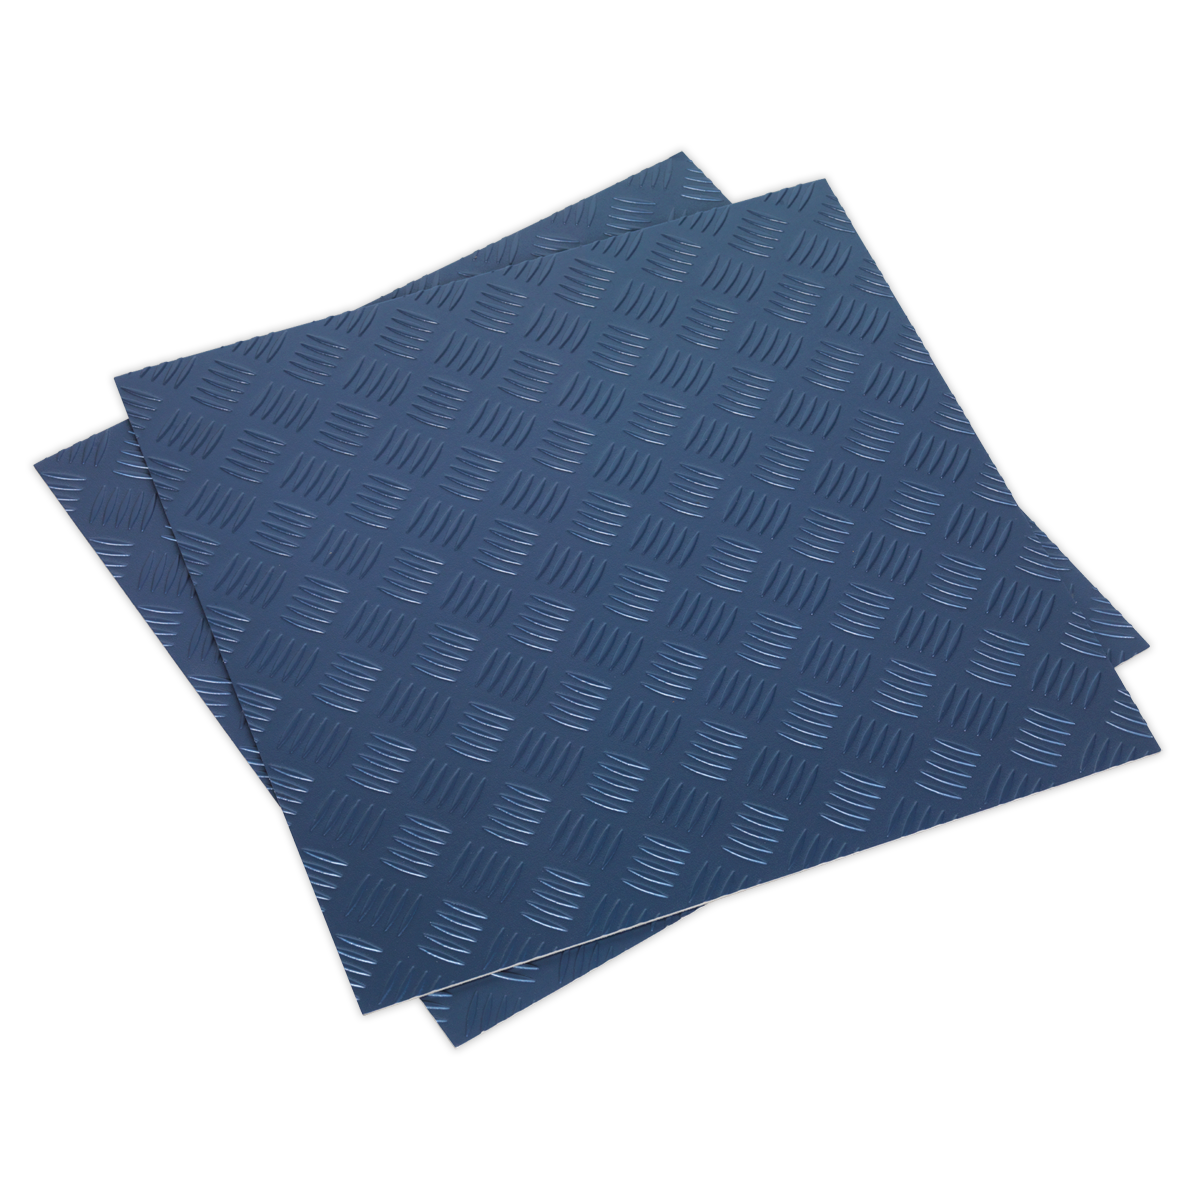 Sealey Vinyl Floor Tile with Peel & Stick Backing - Blue Treadplate Pack of 16